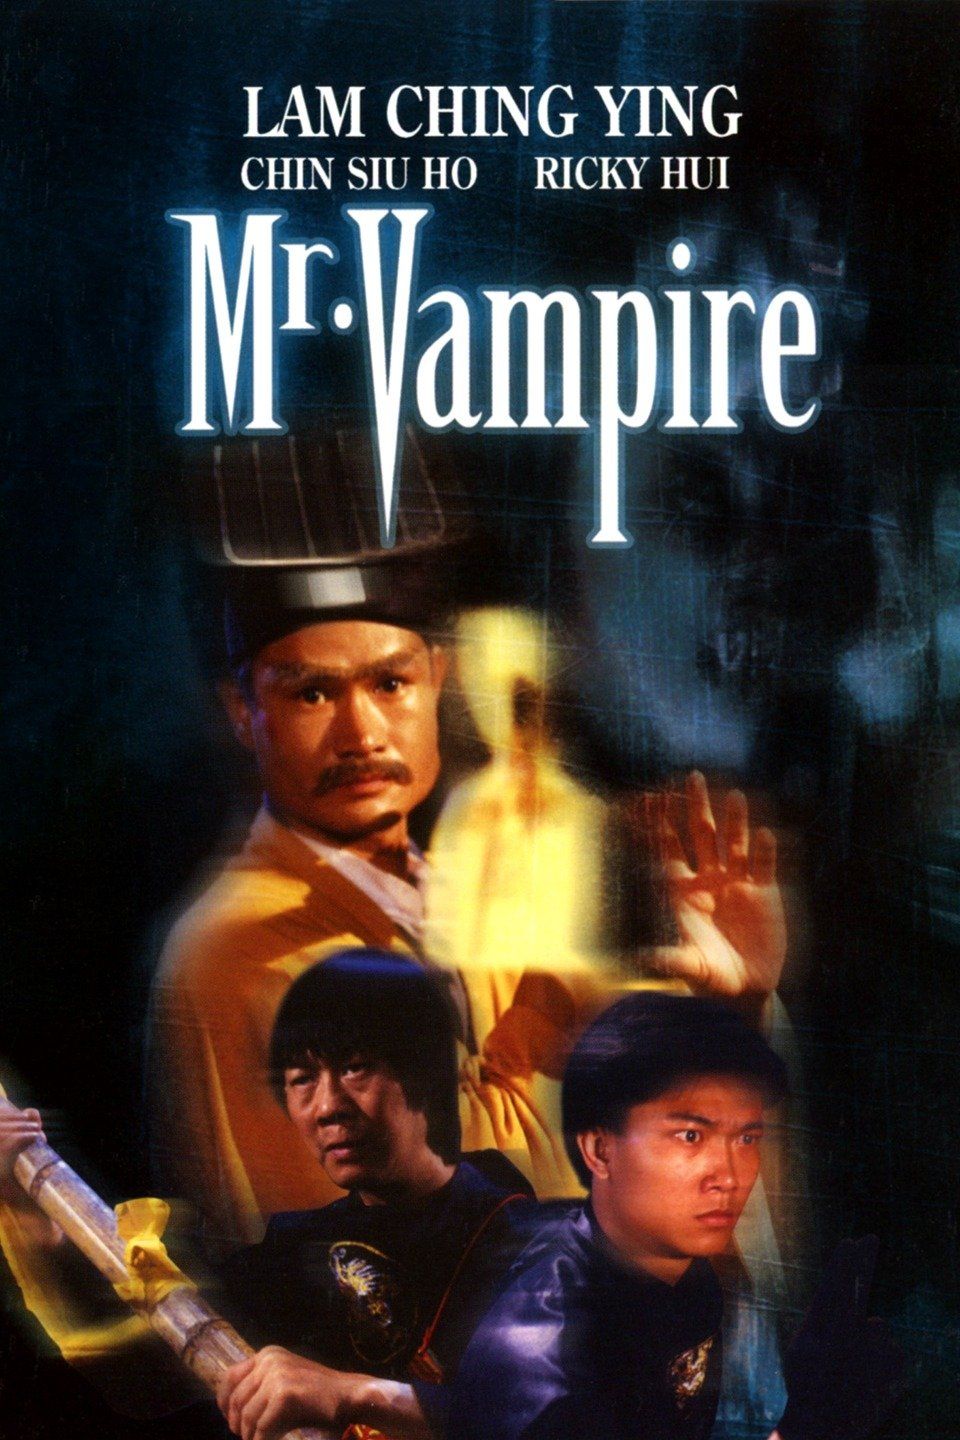 Mr. Vampire (1985) — ภาพยนตร์สยองขวัญที่มีเสน่ห์แบบภาพยนตร์ฮ่องกงคลาสสิก